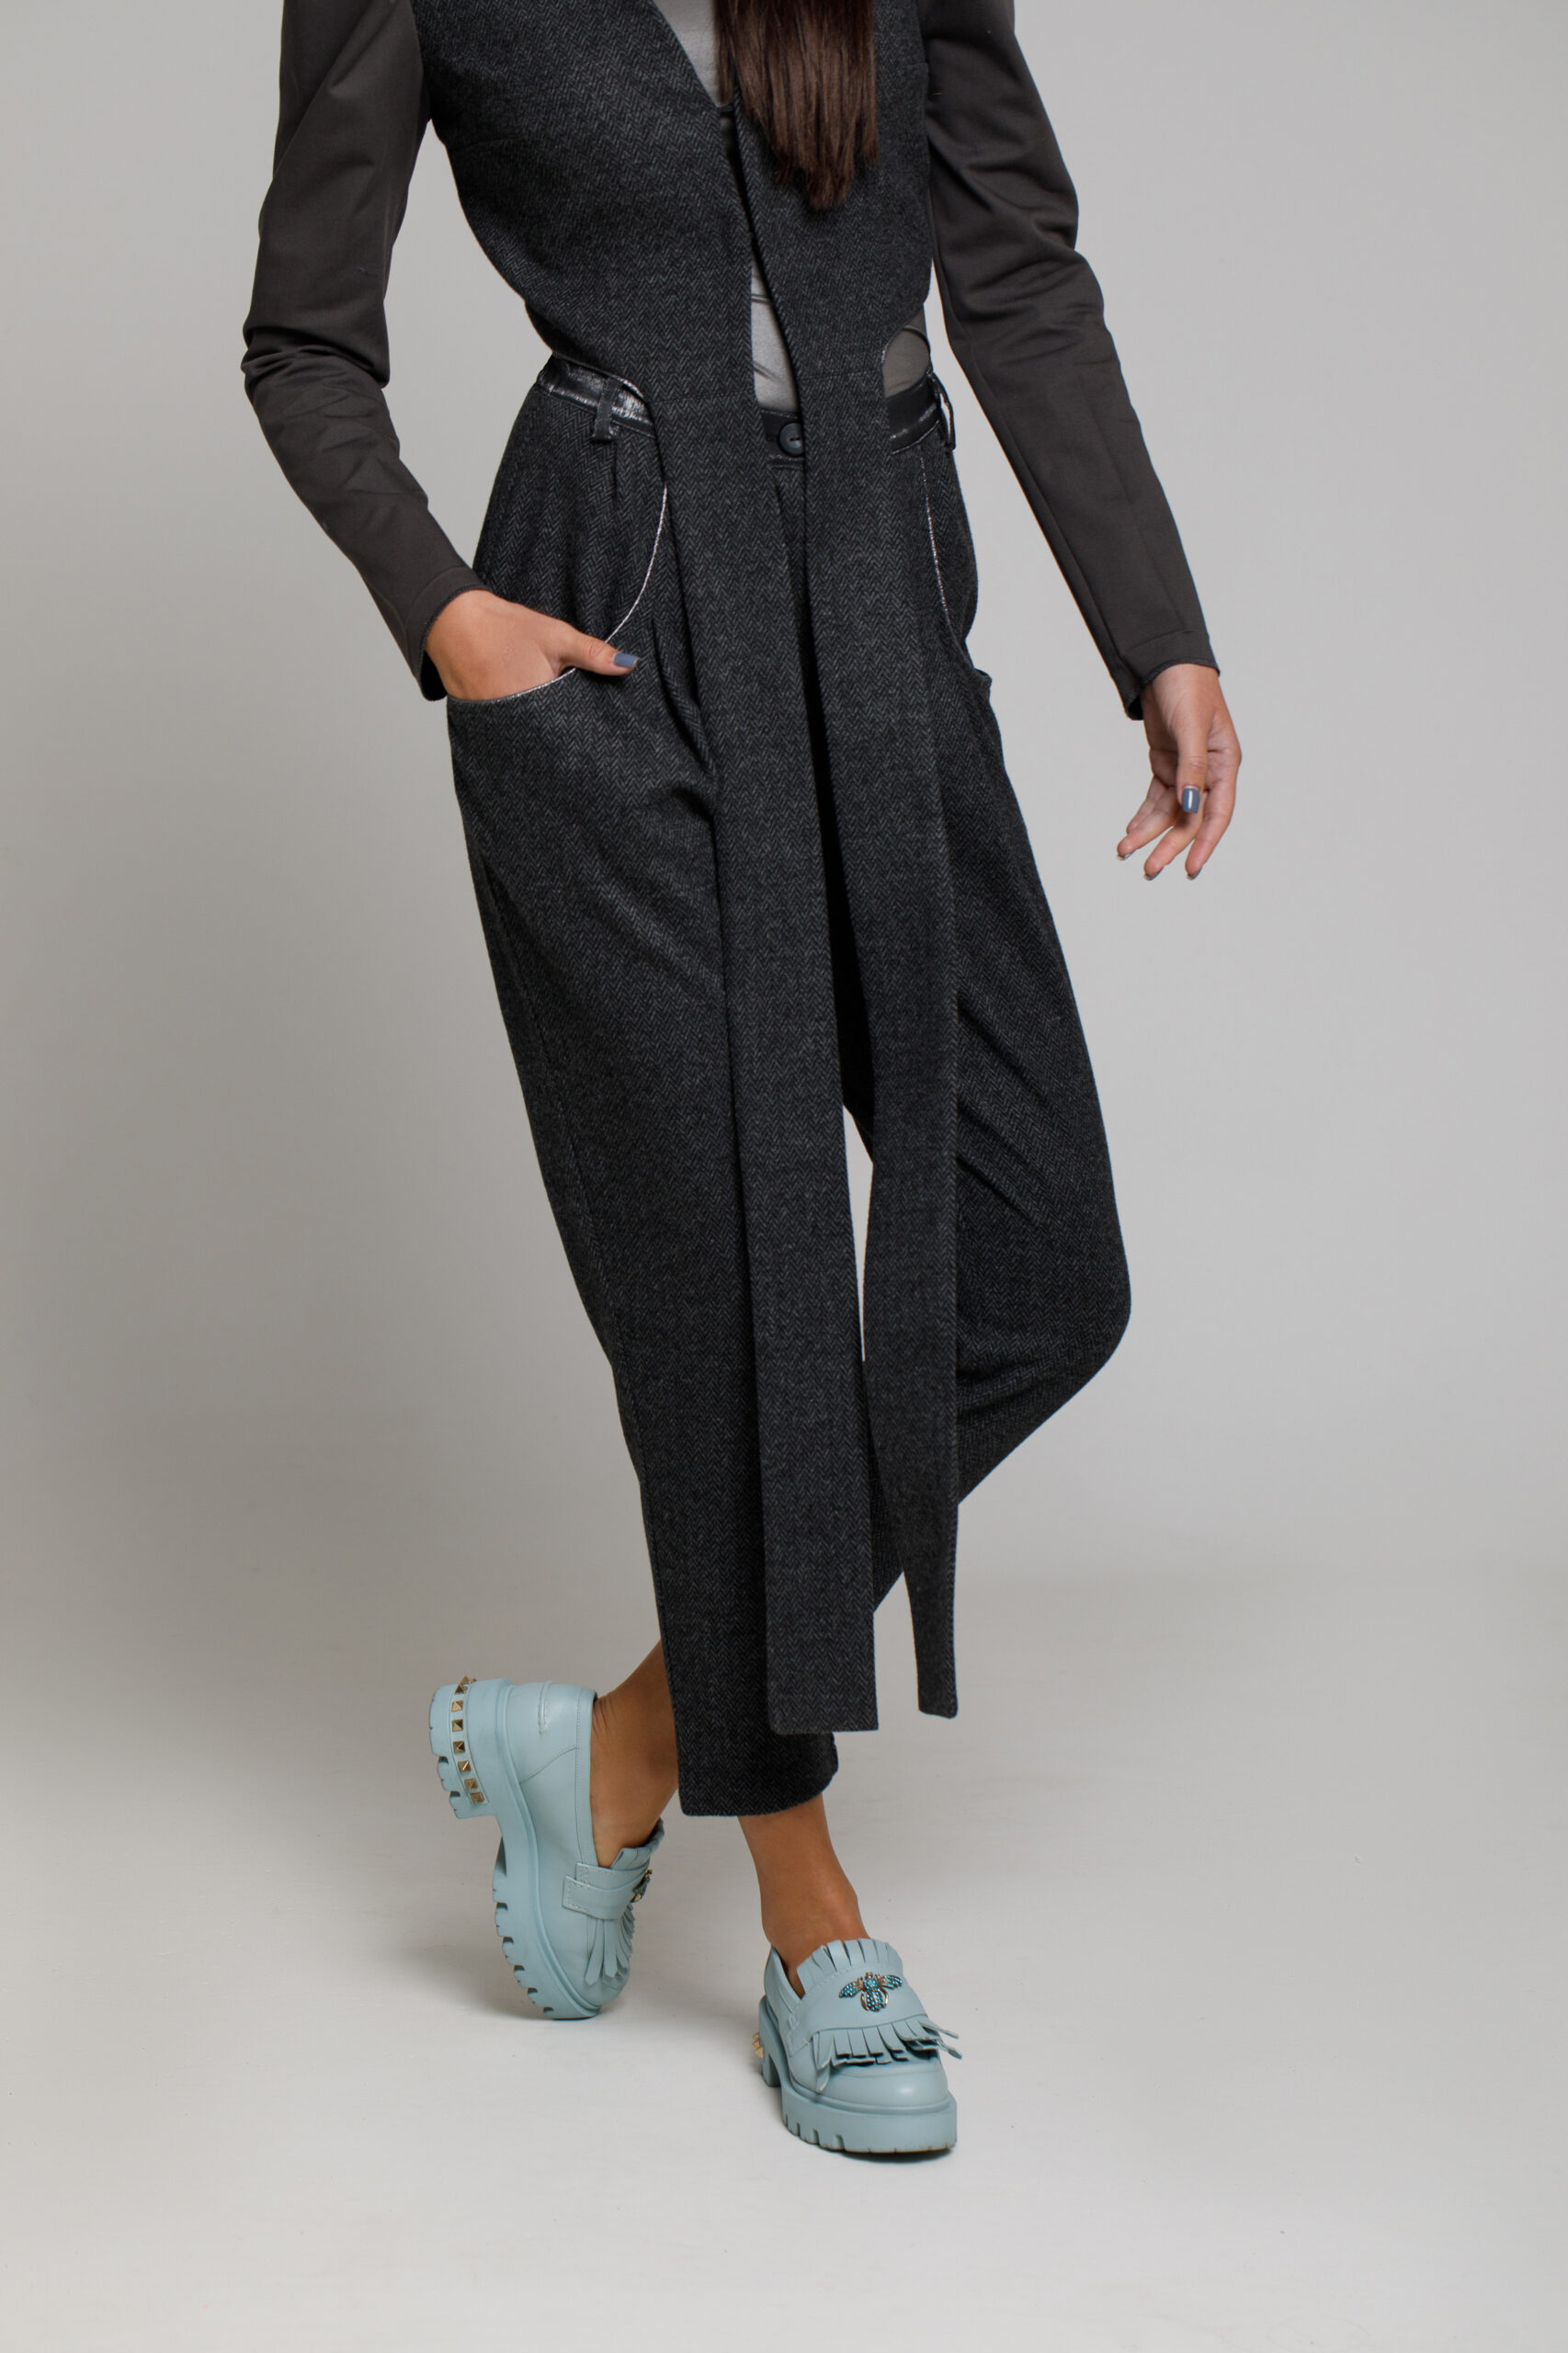 Pantalon FLAVIO”23 din stofa gri. Materiale naturale, design unicat, cu broderie si aplicatii handmade